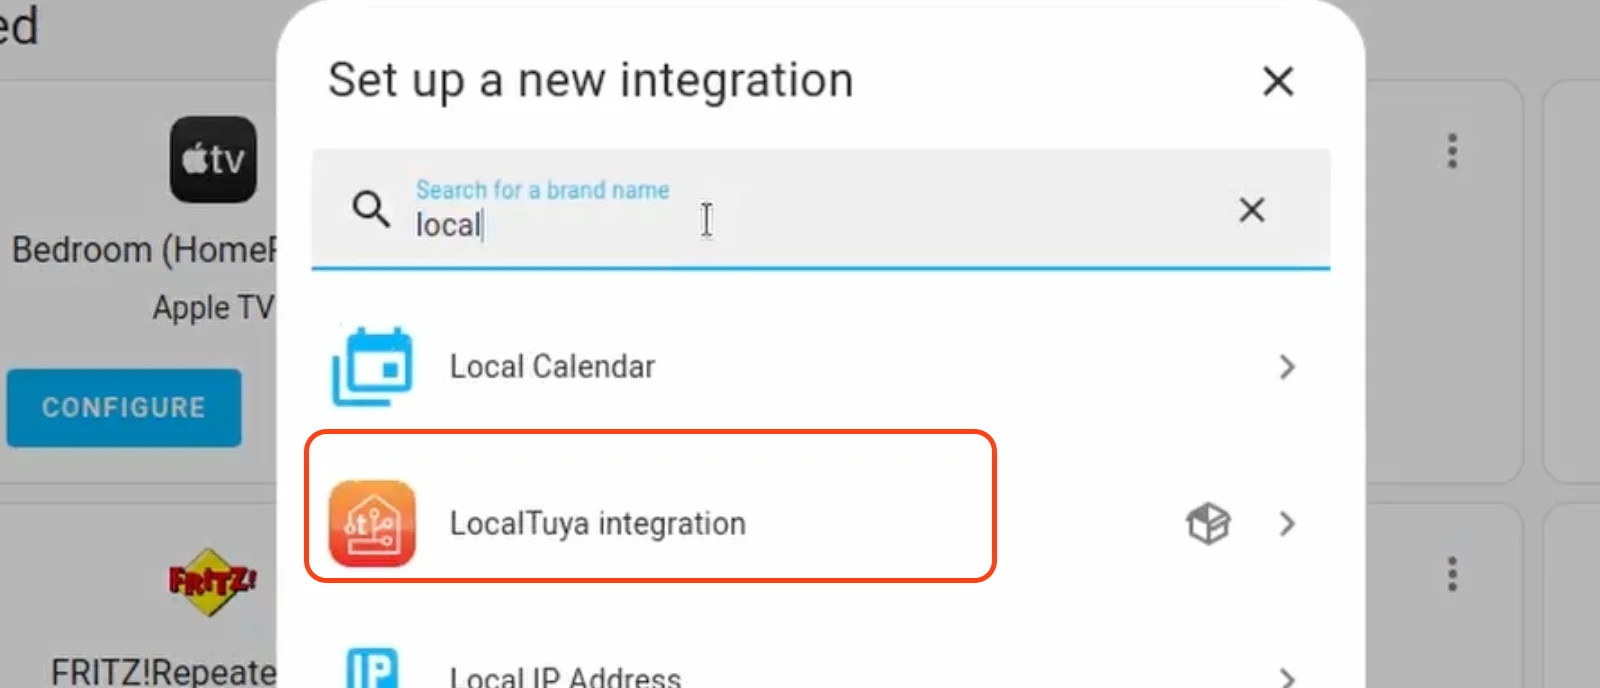 2-integration-local-tuya